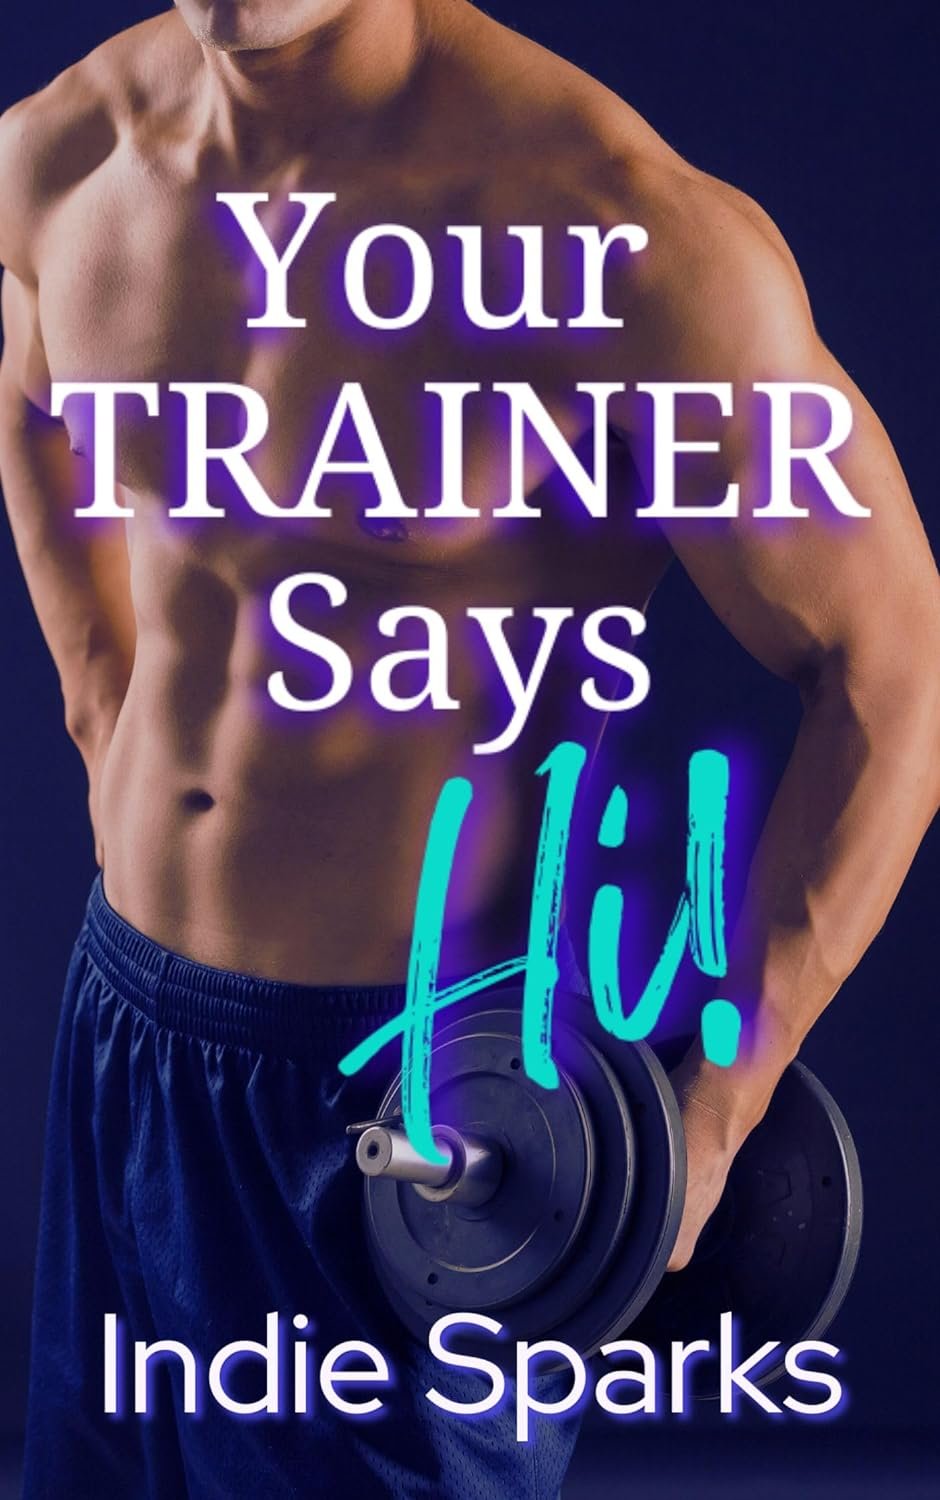 Your Trainer Says Hi (manchest).jpg